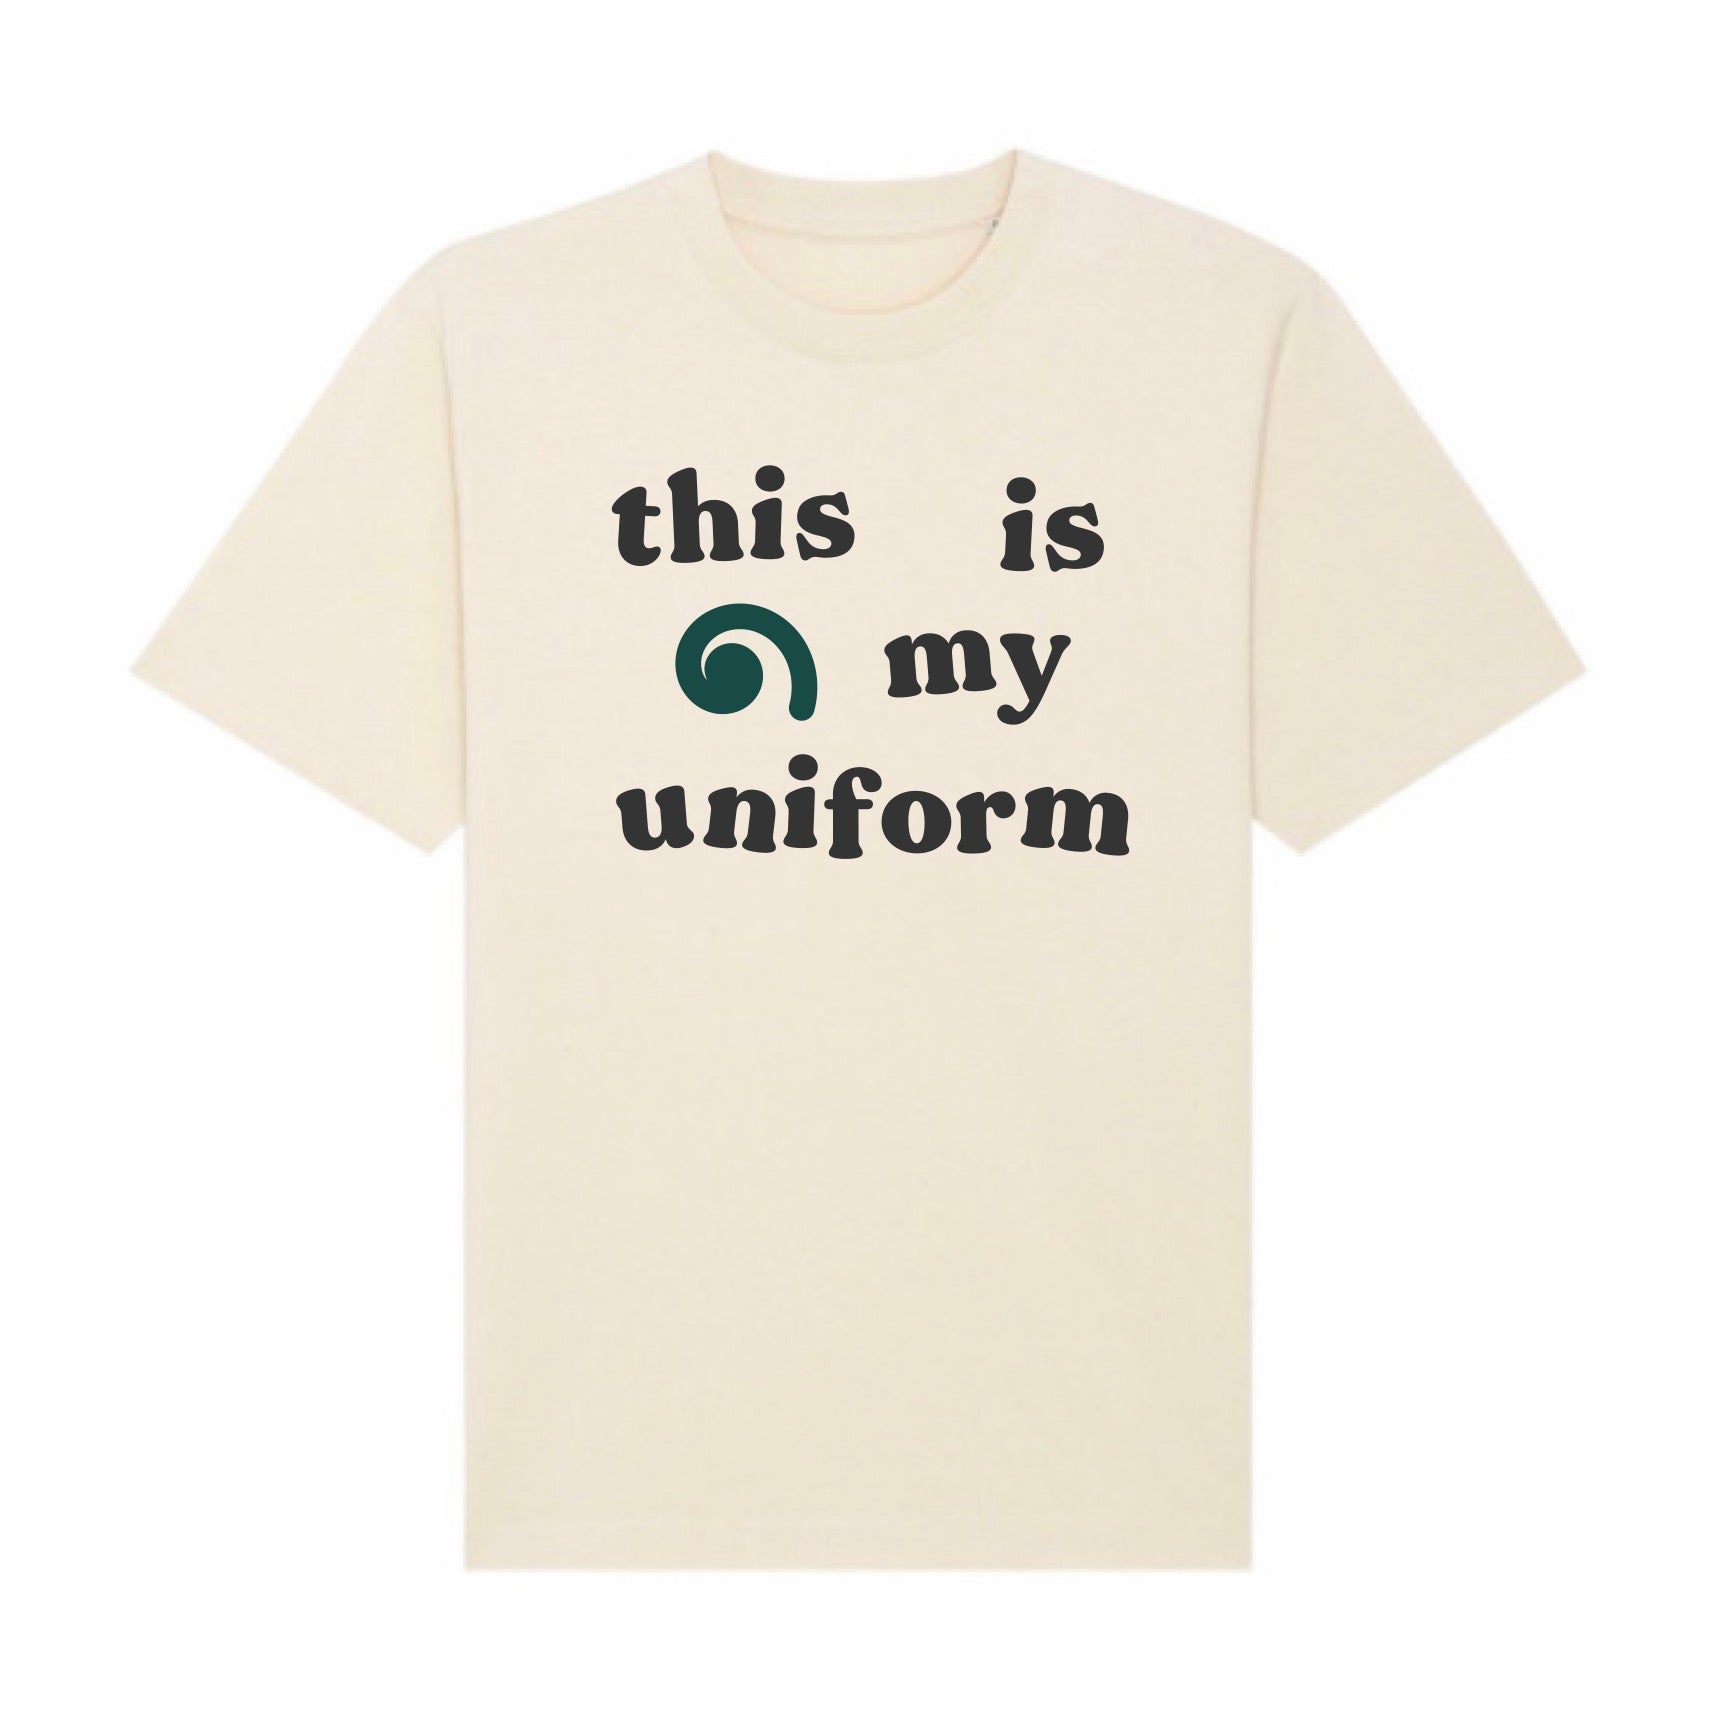 This is my uniform T-shirt - Cream